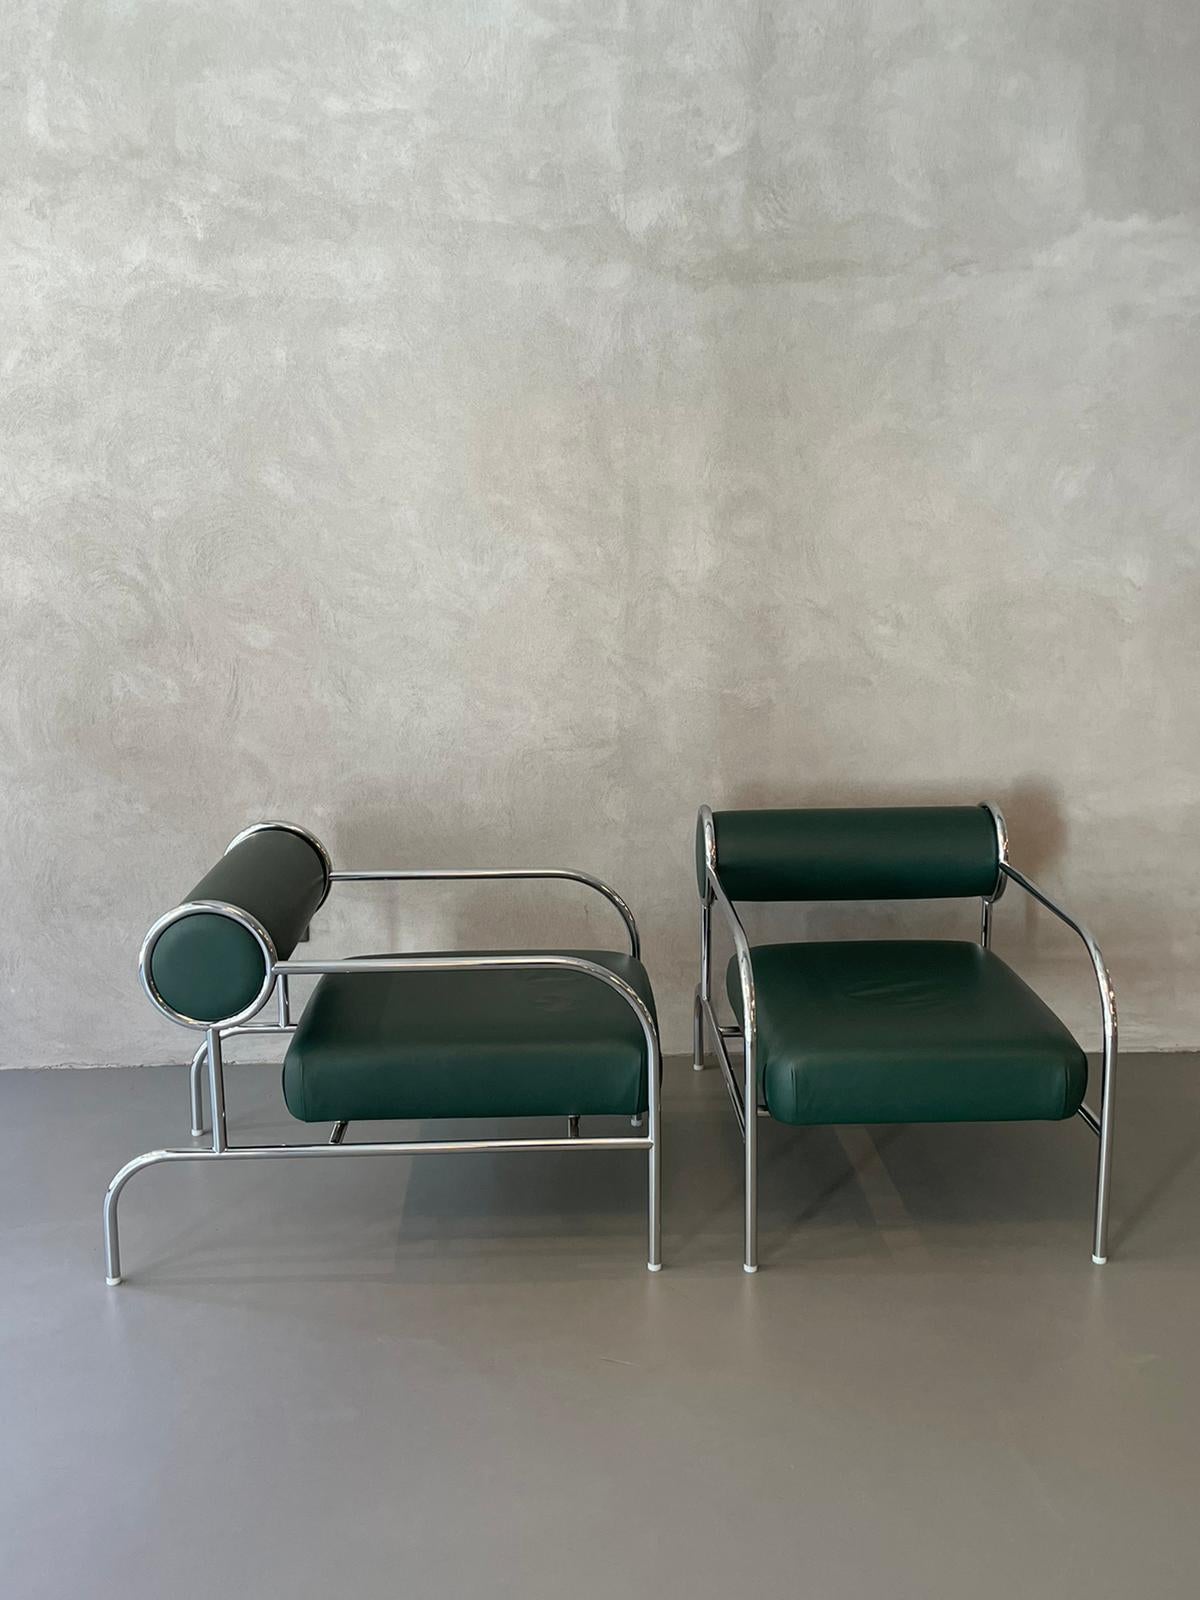 Shiro Kuramata Pair of Armchairs Green Leather and Chrome Italy Vintage Patina 1